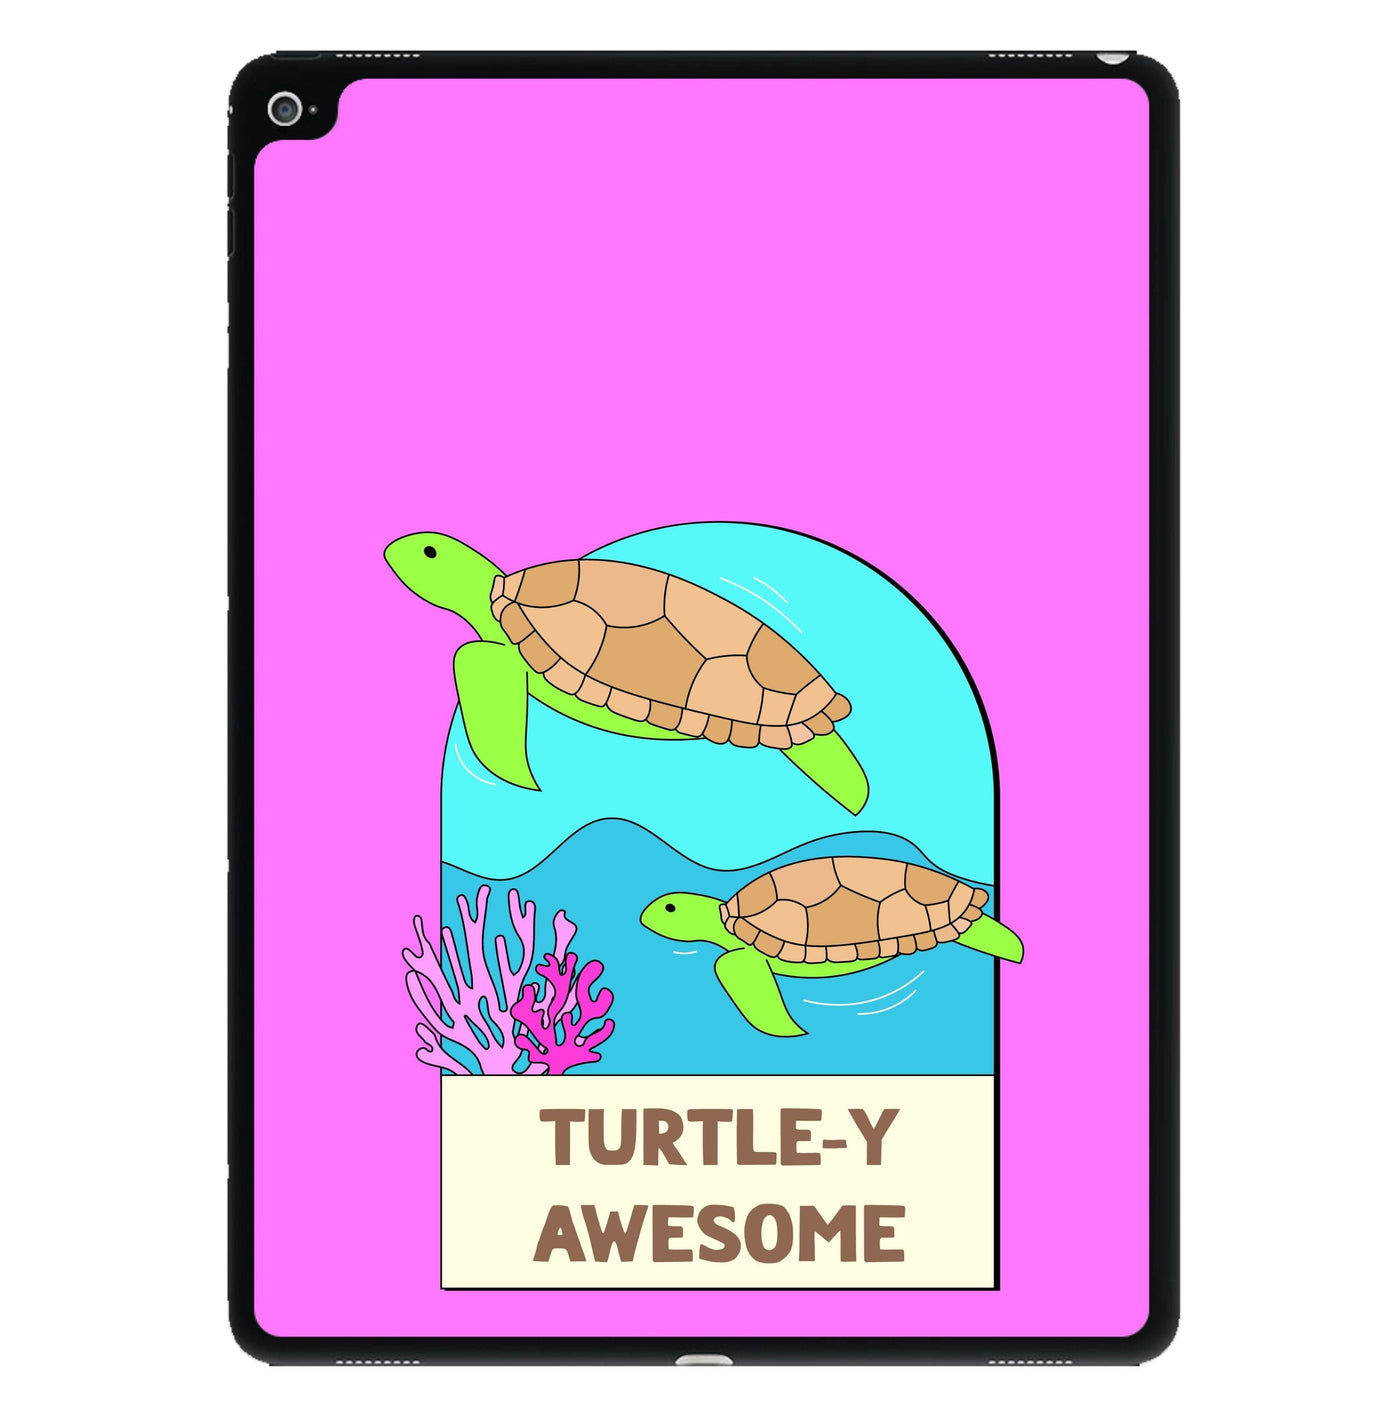 Turtle-y Awesome - Sealife iPad Case